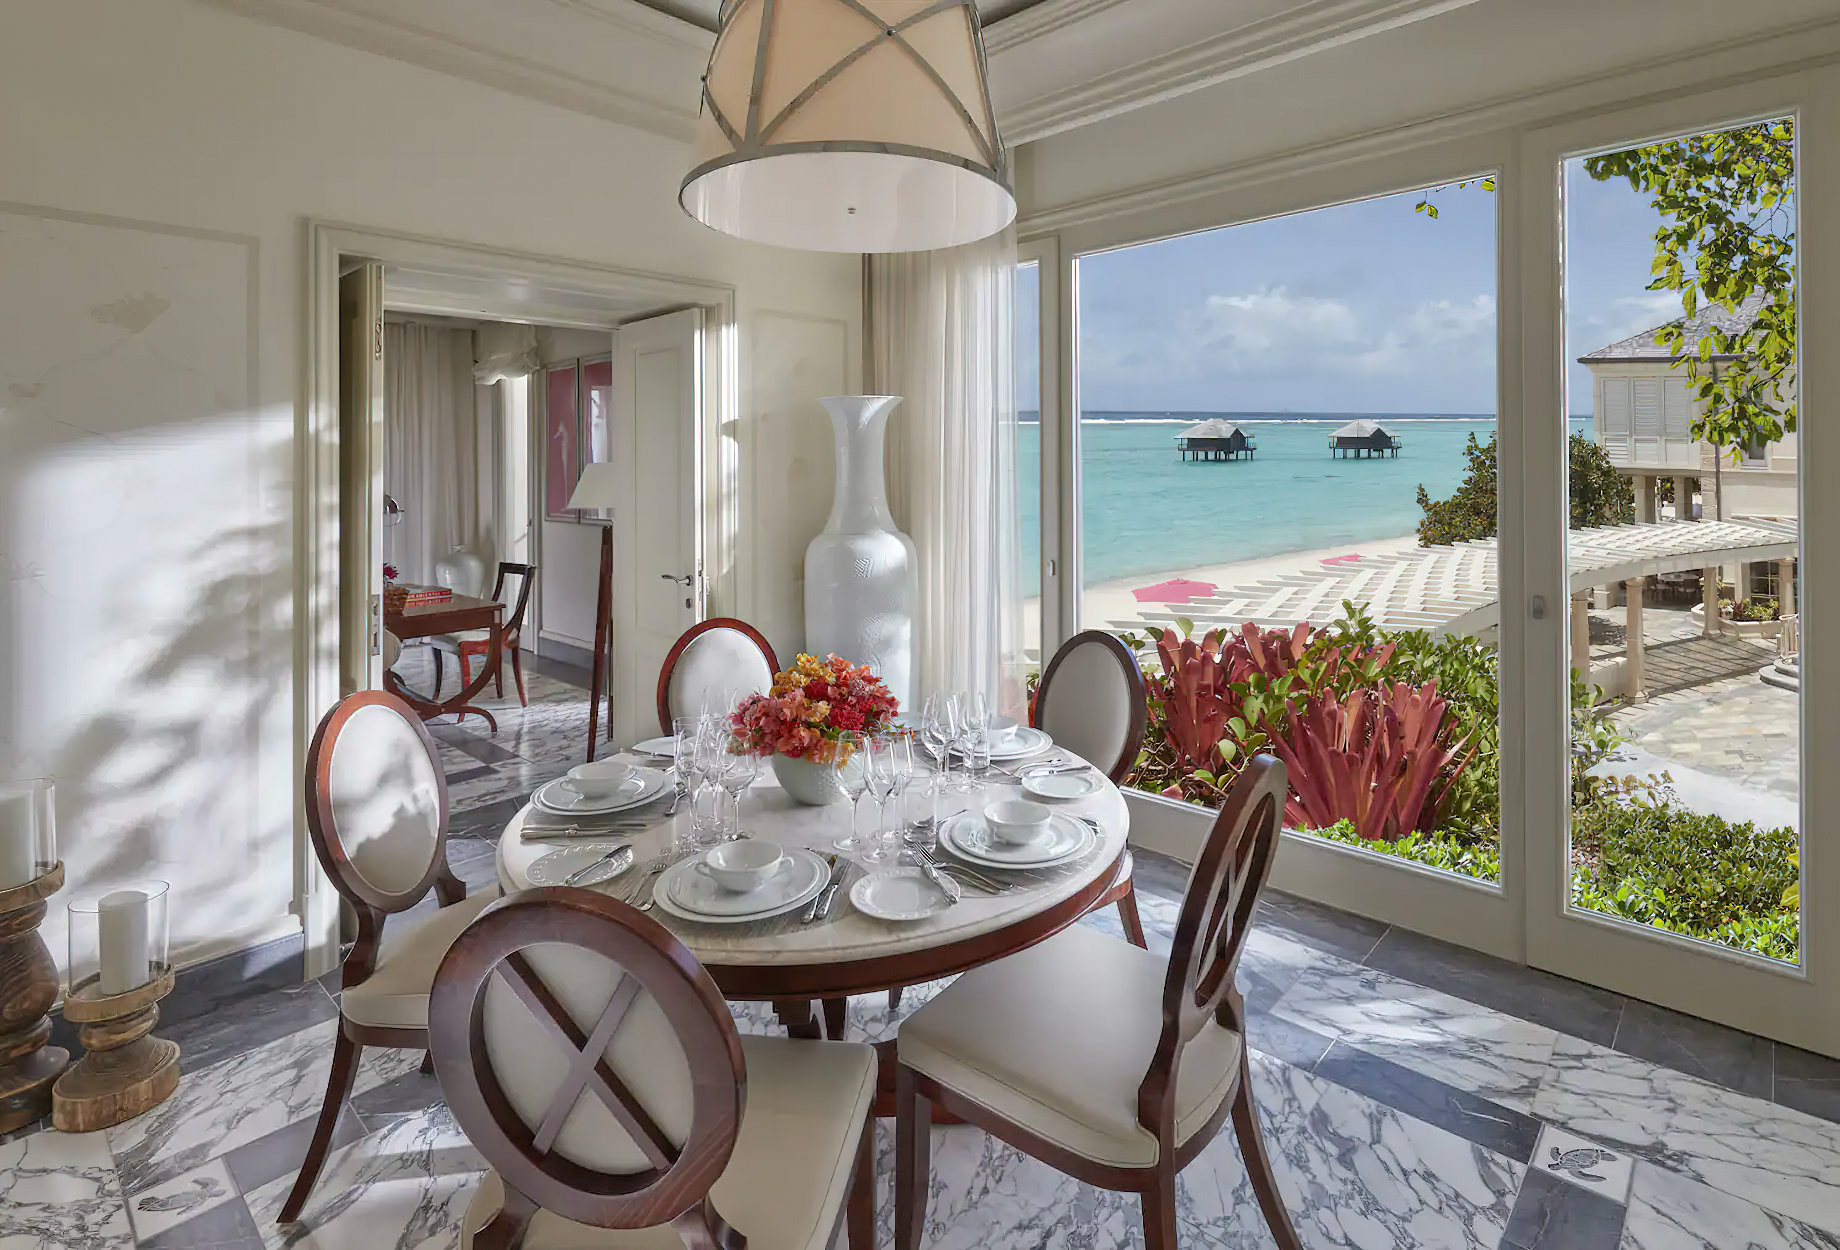 Mandarin Oriental, Canouan Island Resort - Saint Vincent and the Grenadines - One Bedroom Beachfront Suite Dining Room